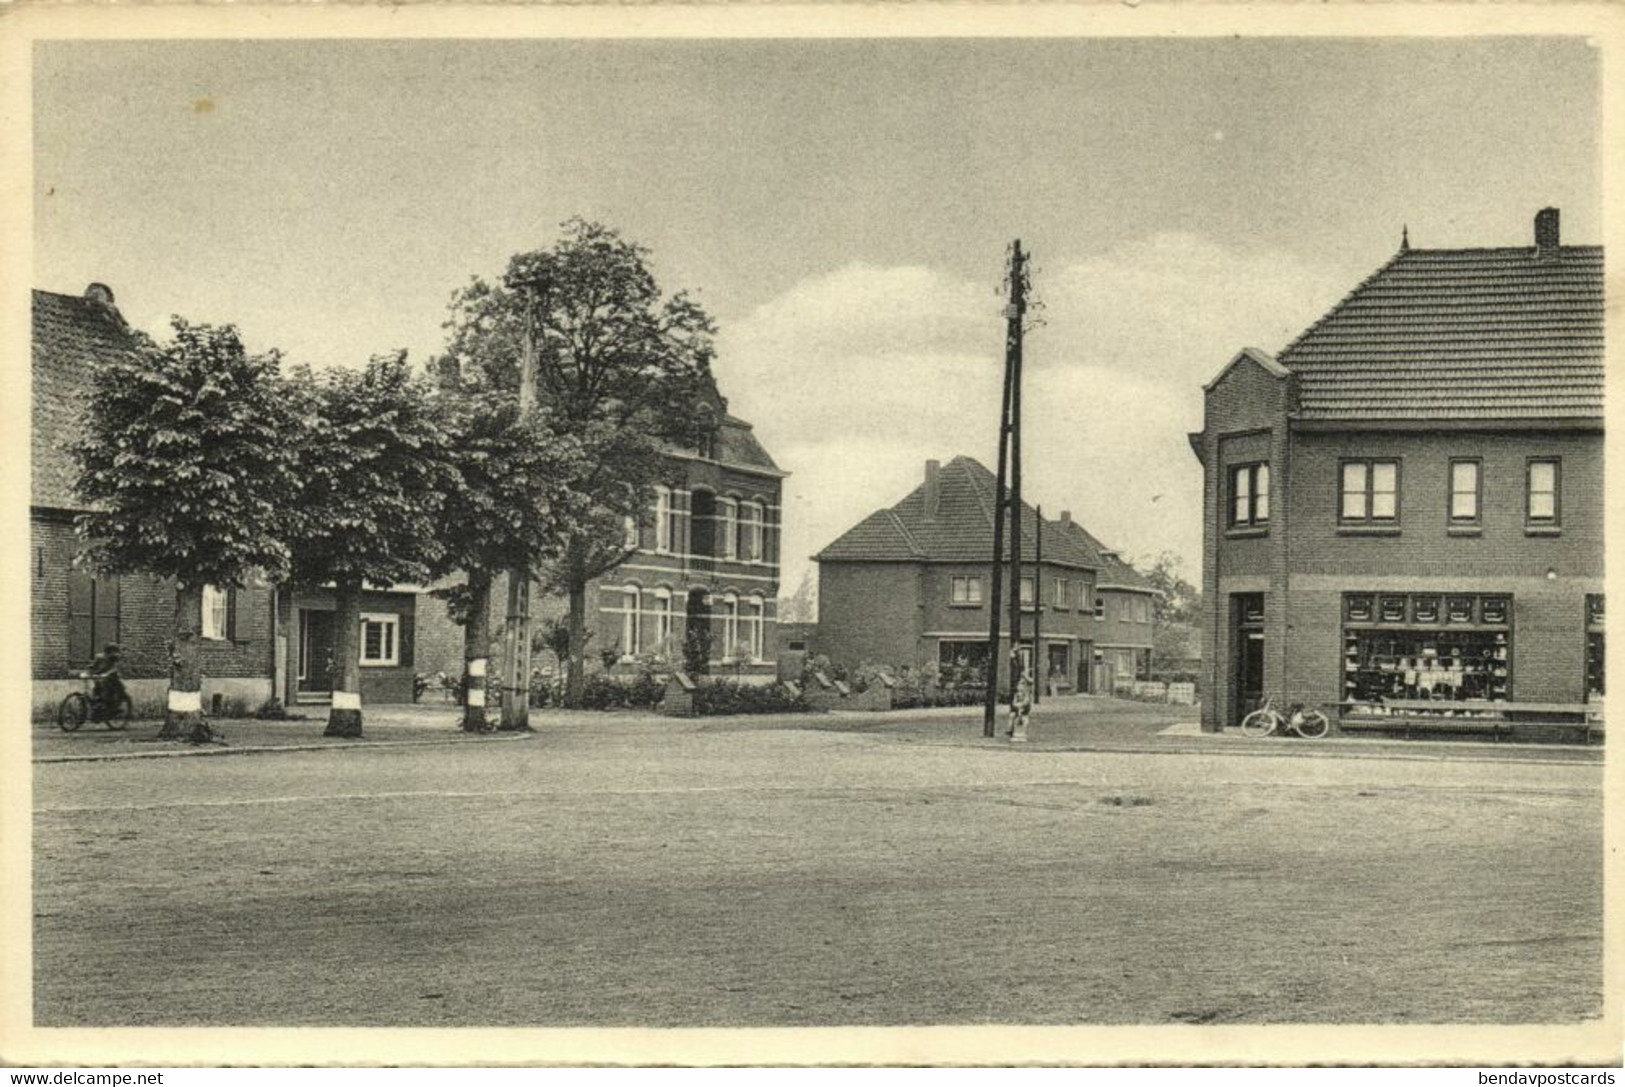 Belgium, ACHEL, Dorpsplein (1950s) Postcard - Hamont-Achel